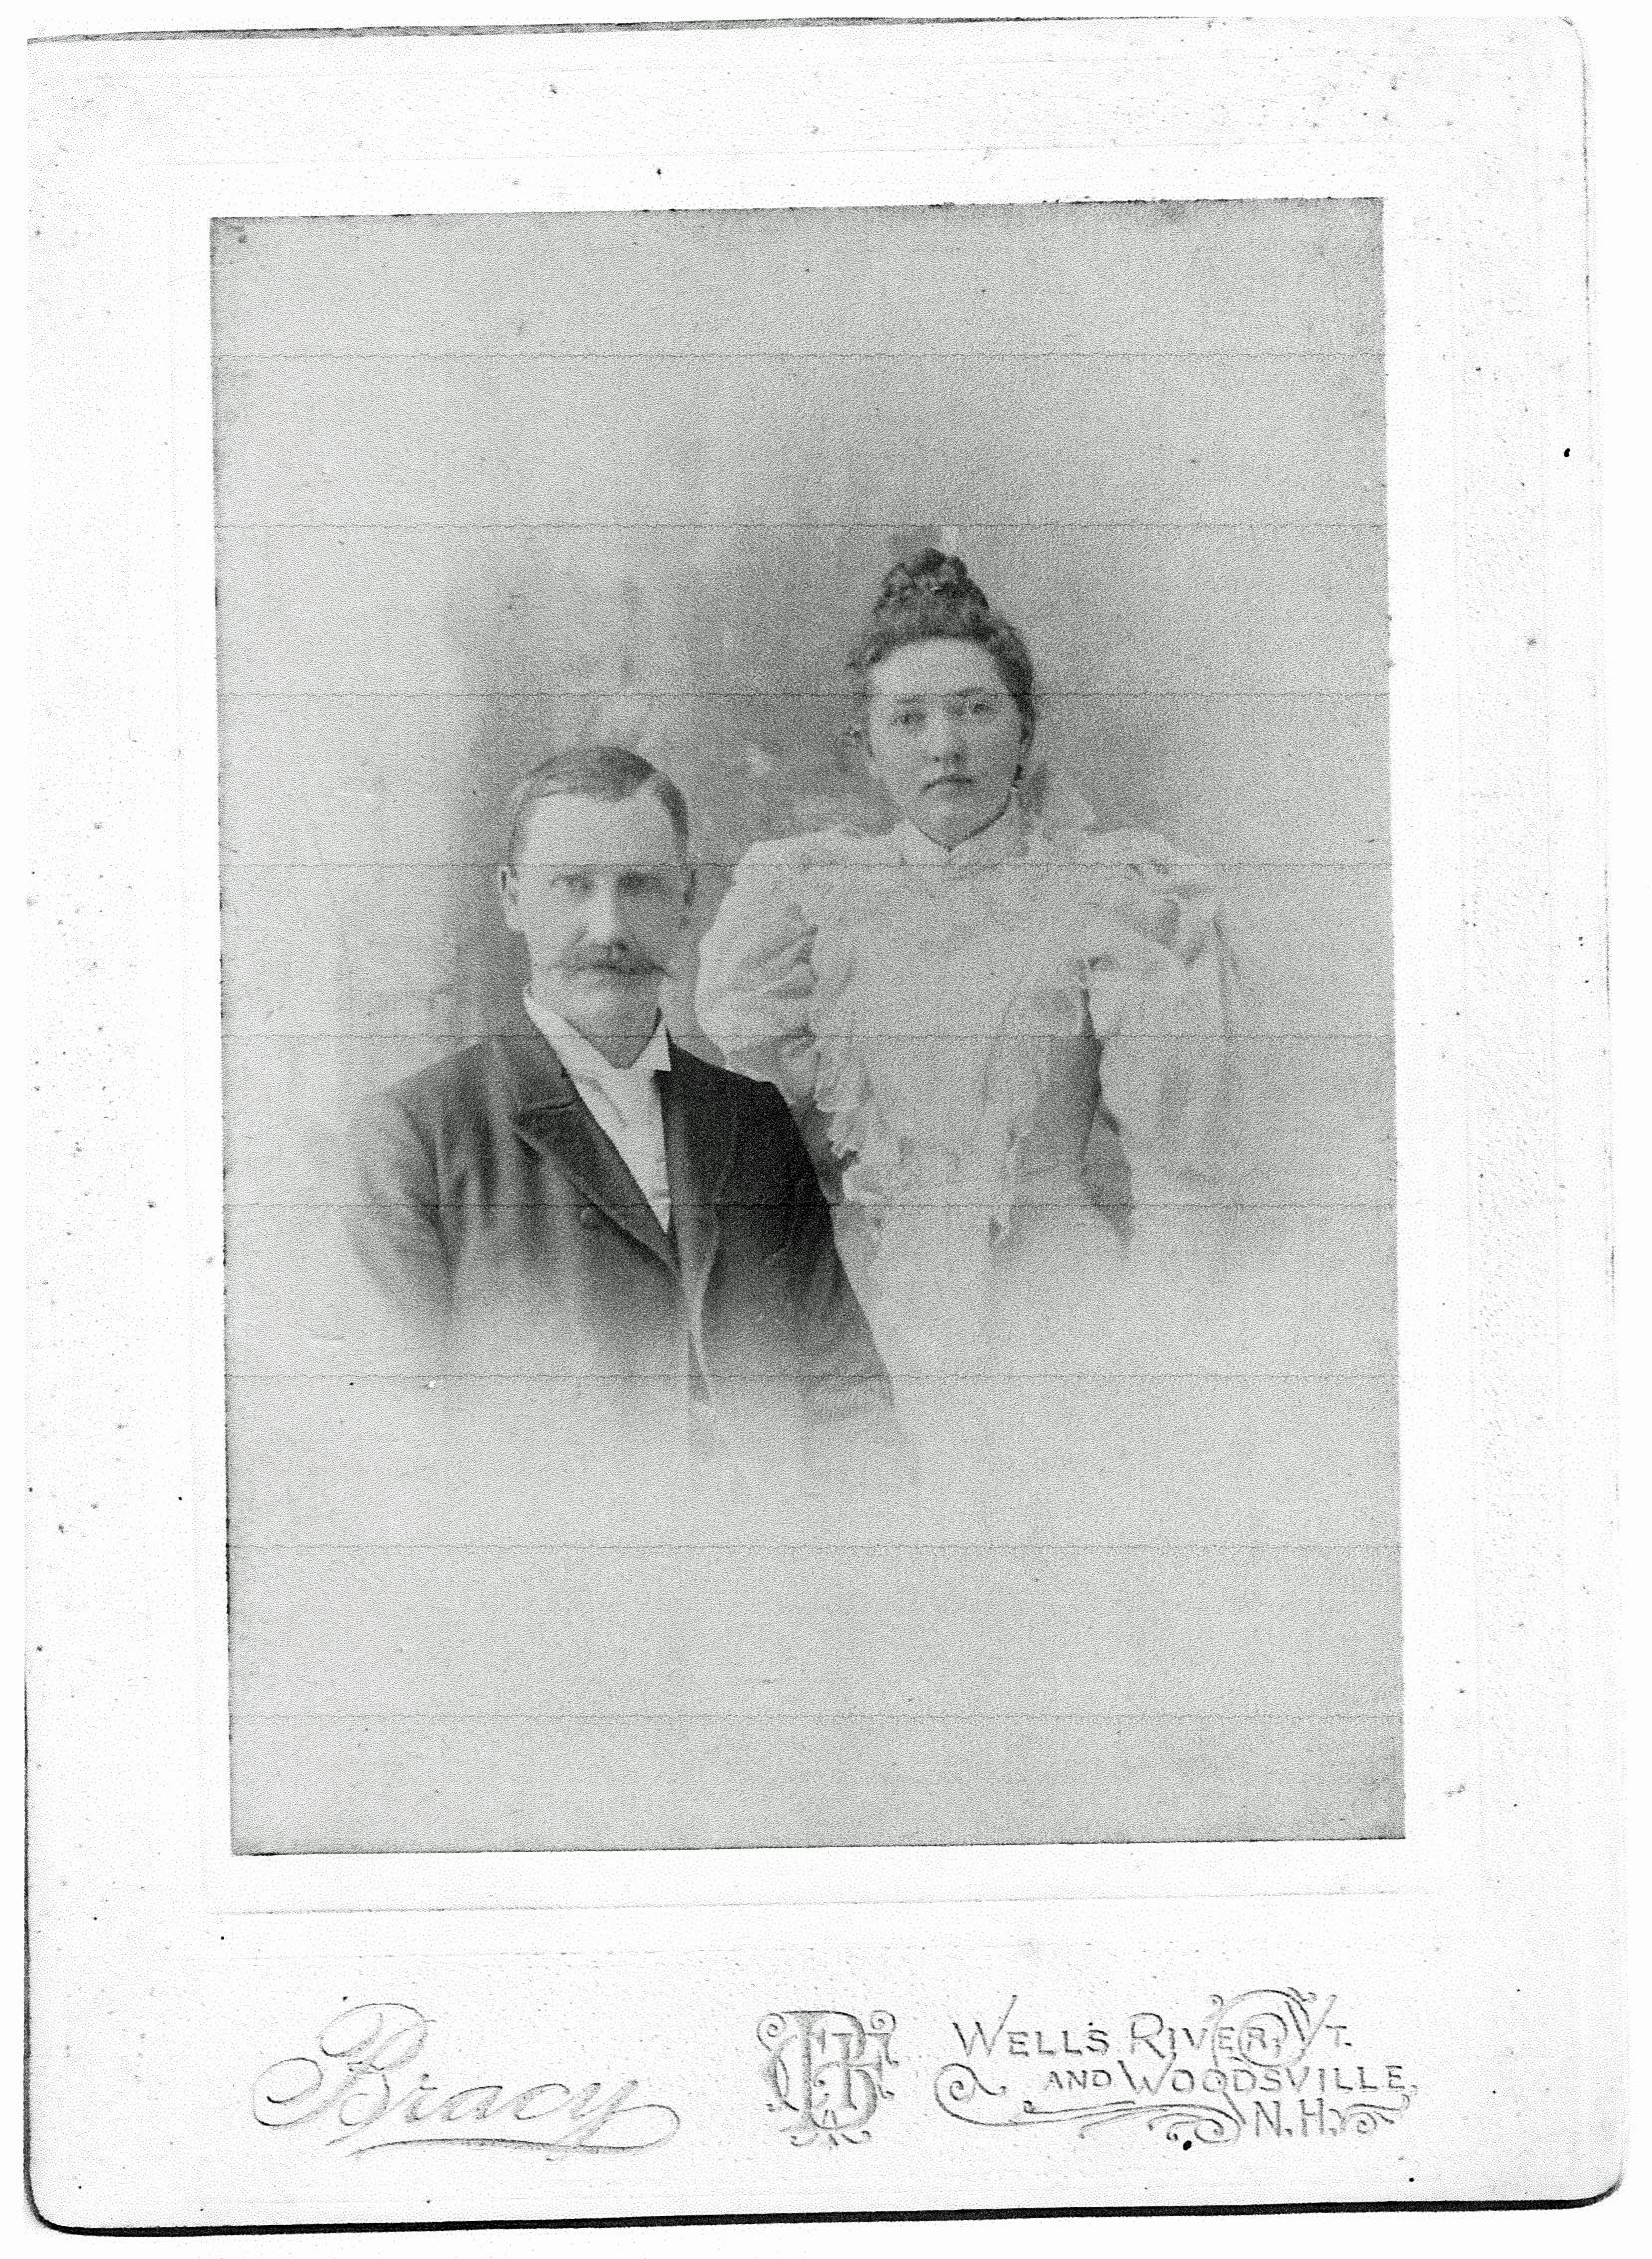 Horace's parents Warren and Jennie Mills